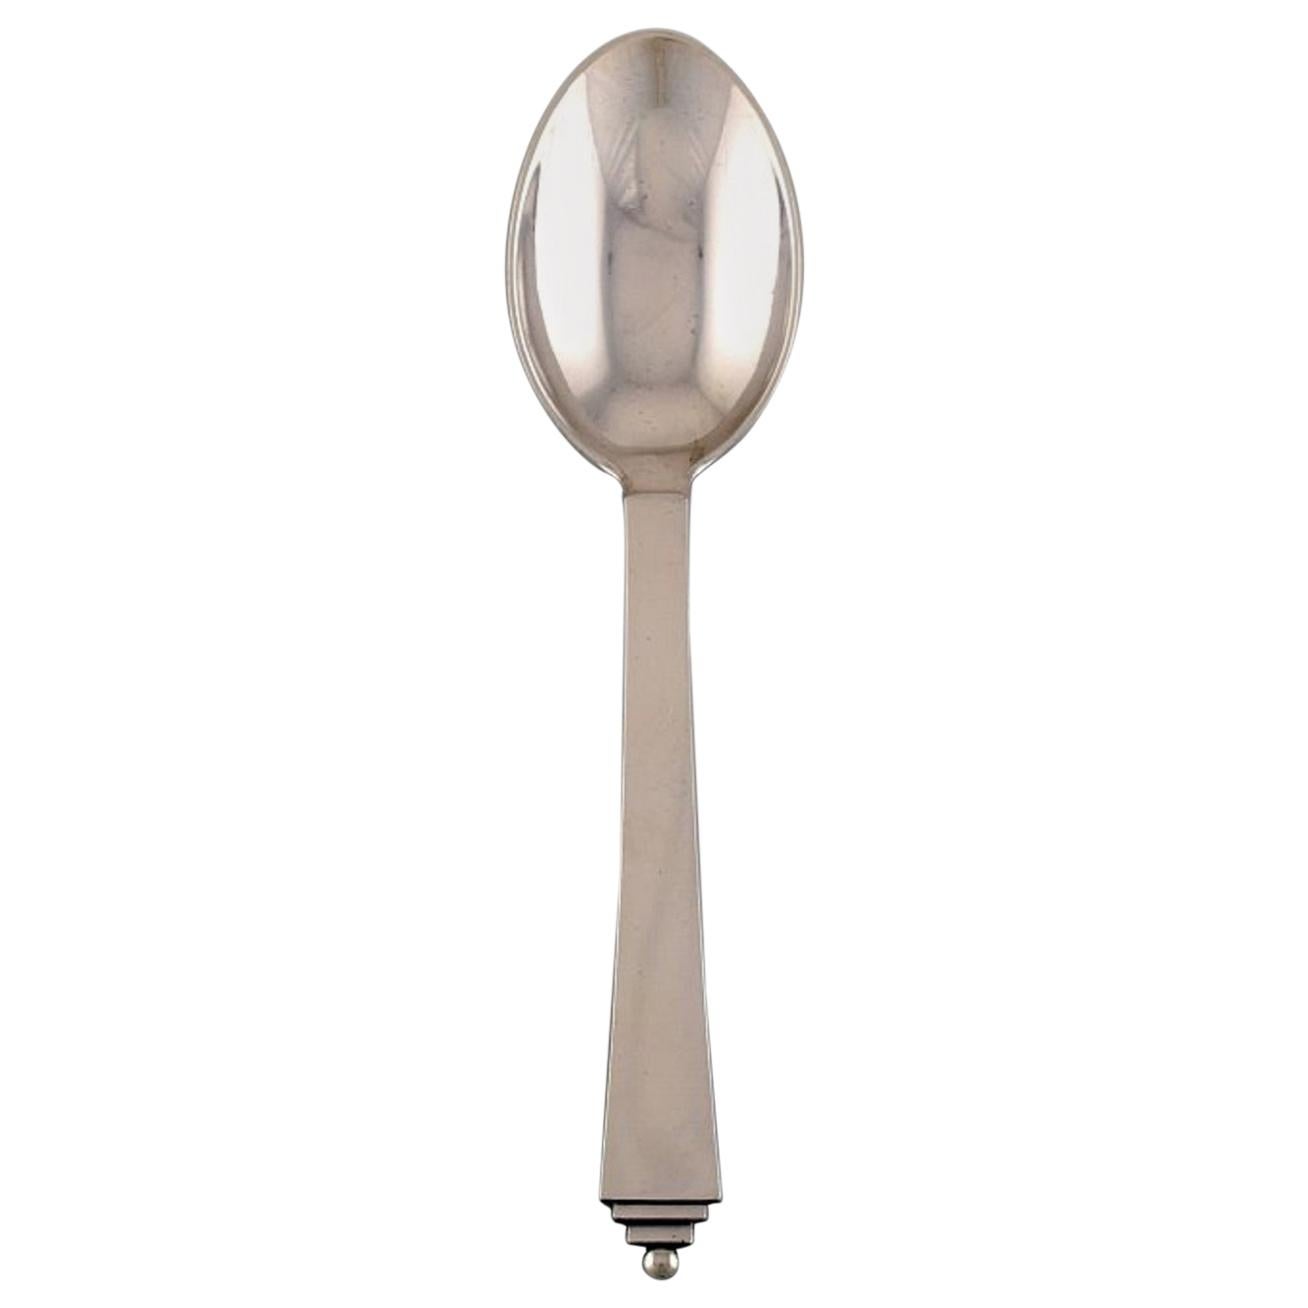 Georg Jensen Pyramid Dinner Spoon in Sterling Silver, Designed by Harald Nielsen